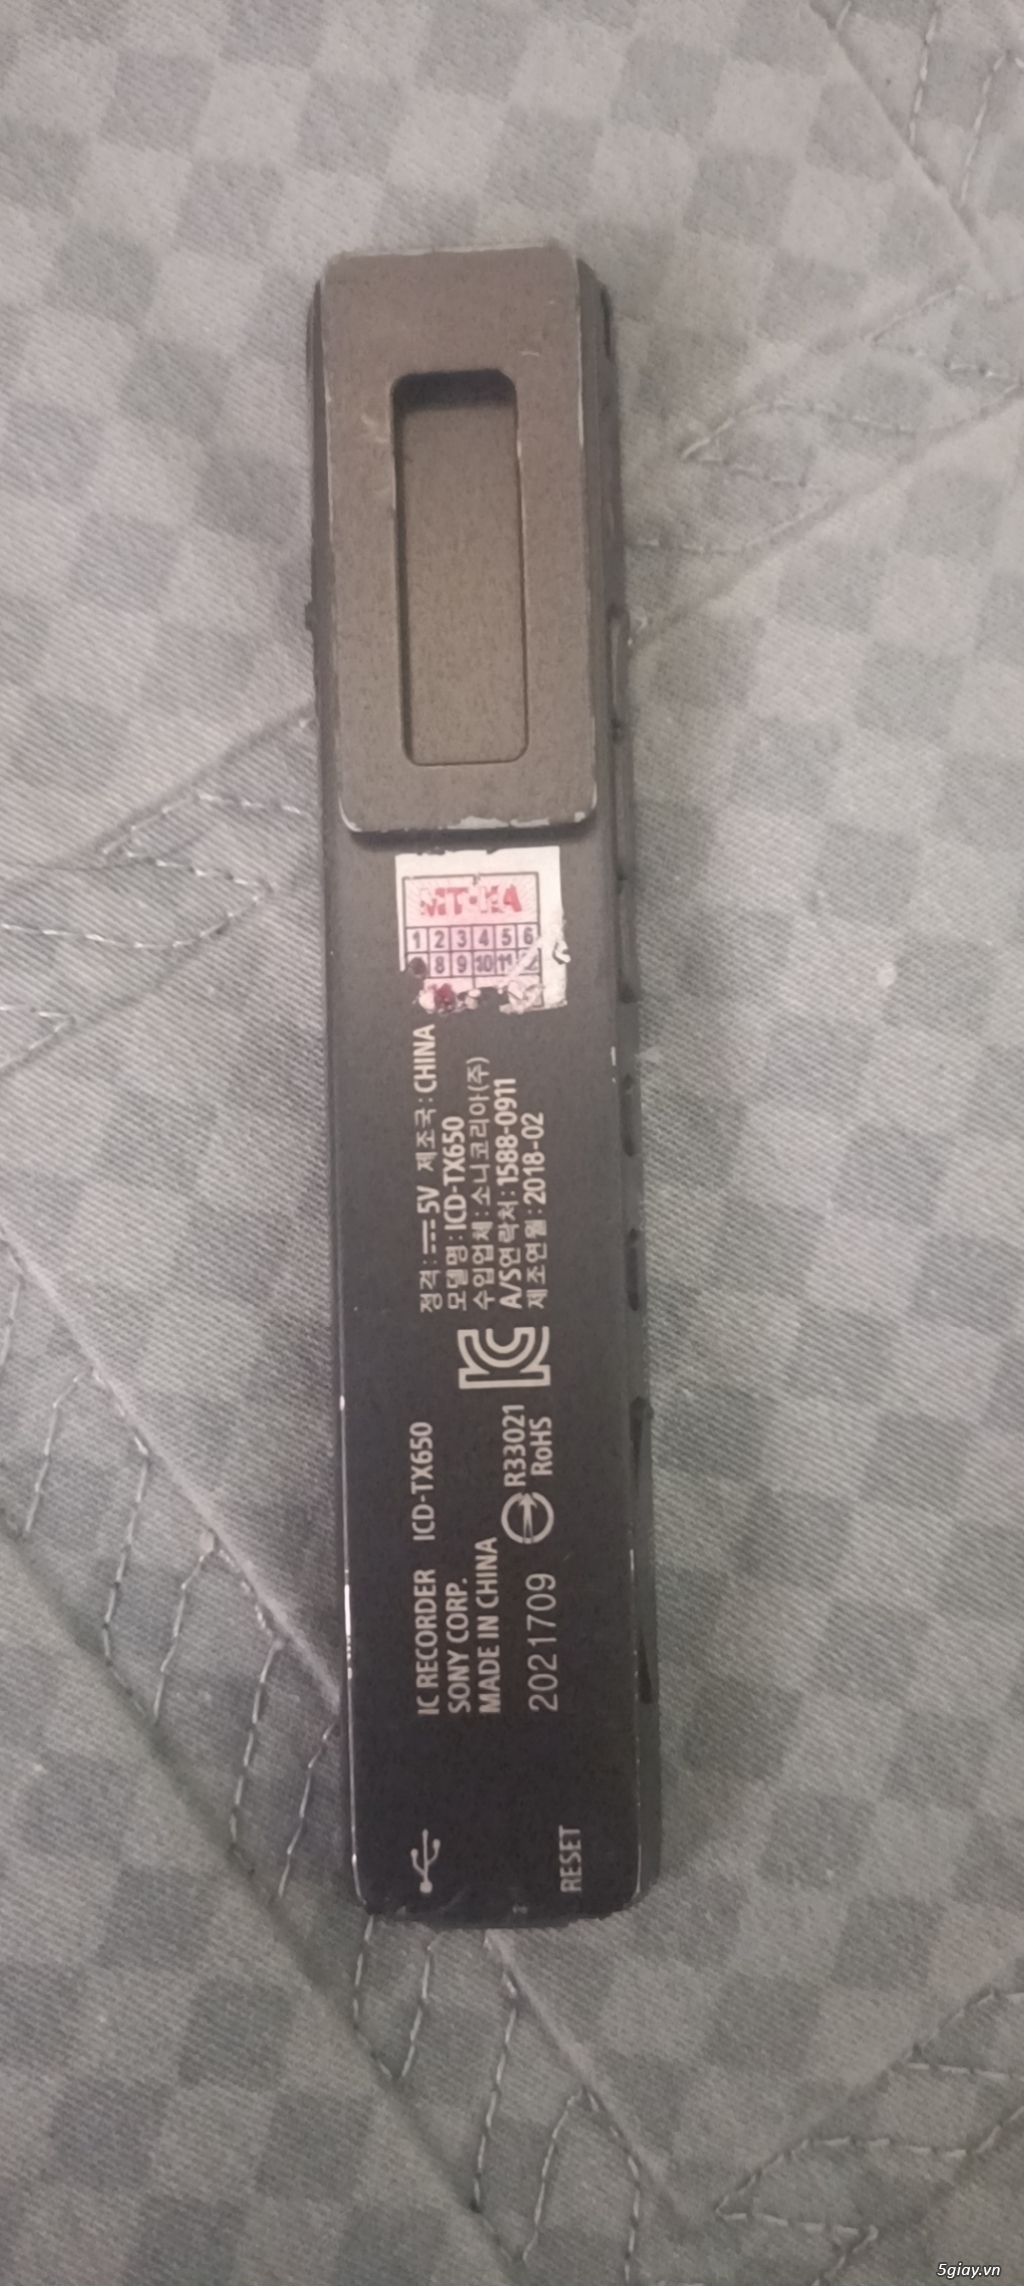 Máy ghi âm tx-650 Sony - 1